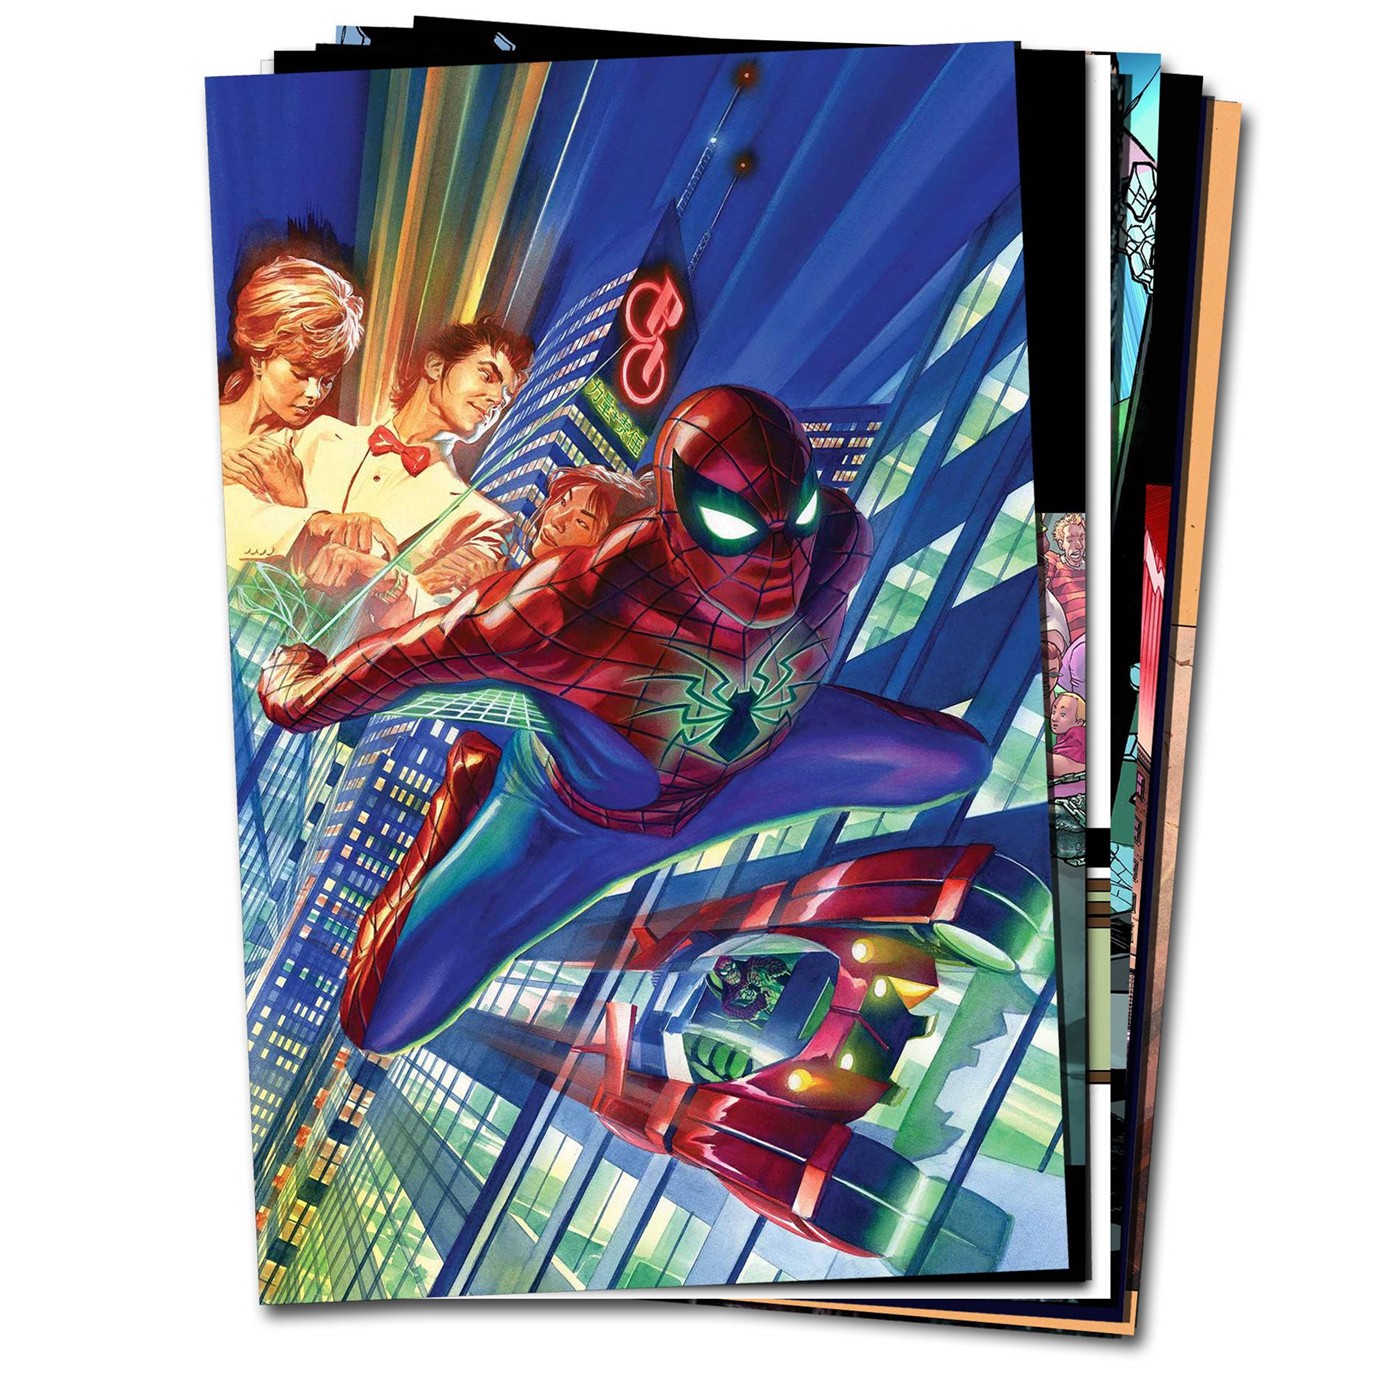 Spiderman Comic Book Binge Pack for October